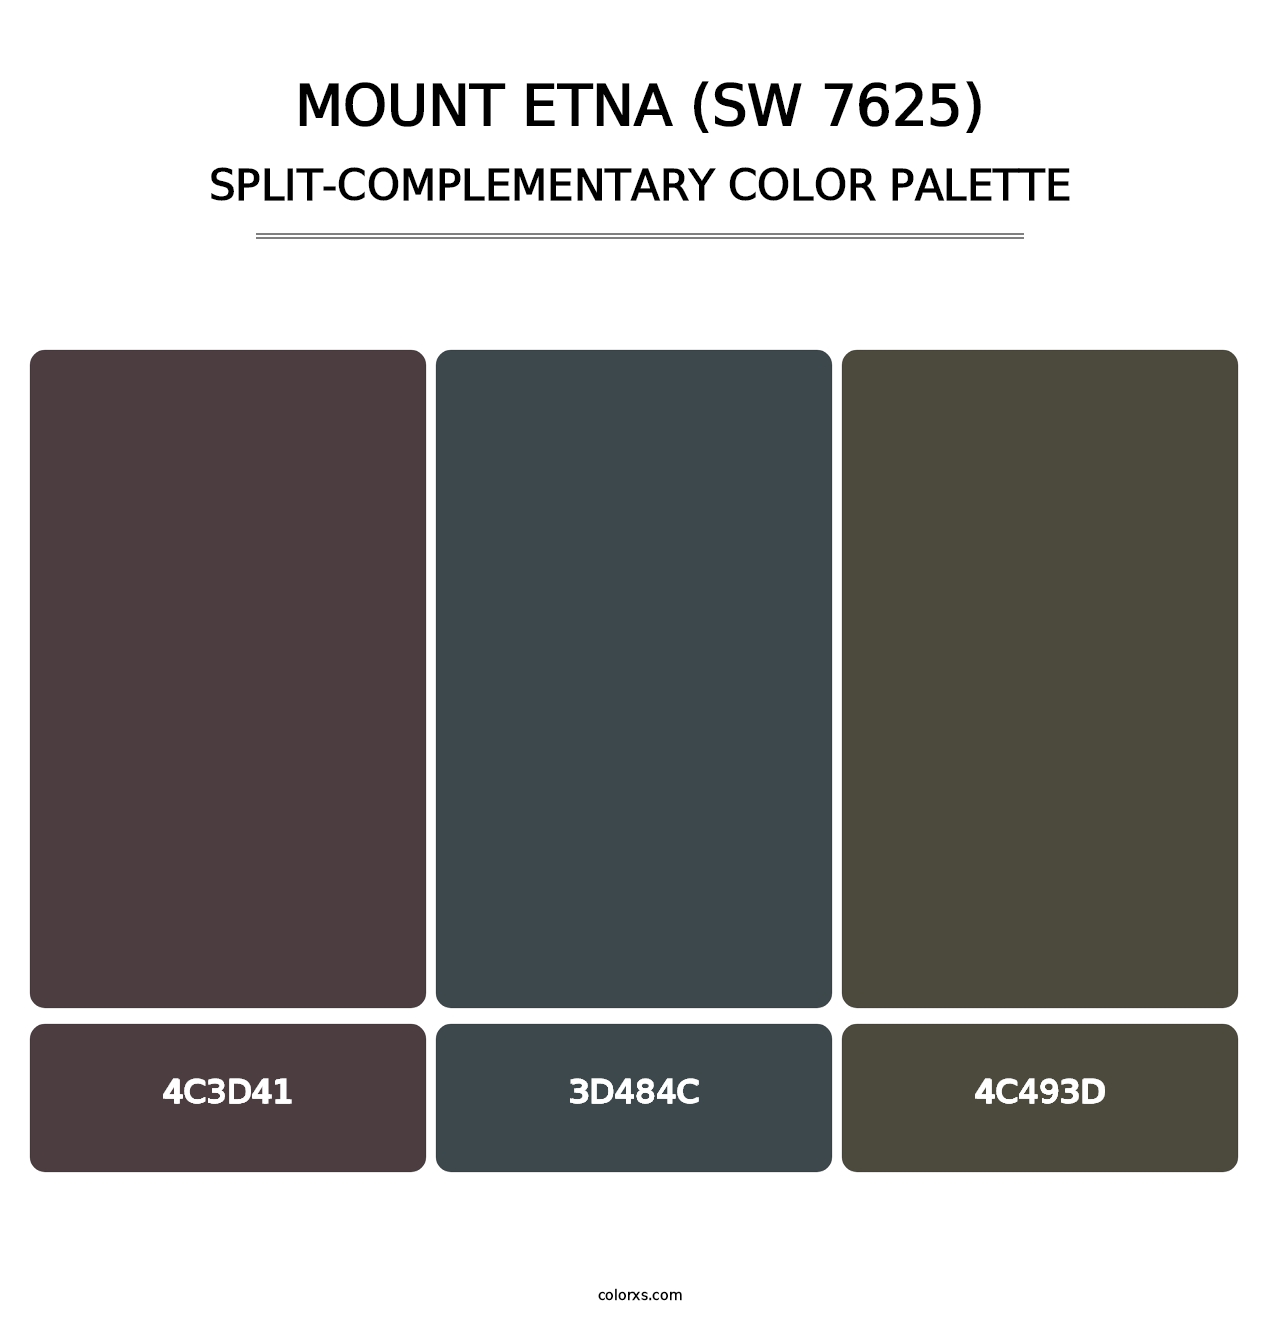 Mount Etna (SW 7625) - Split-Complementary Color Palette